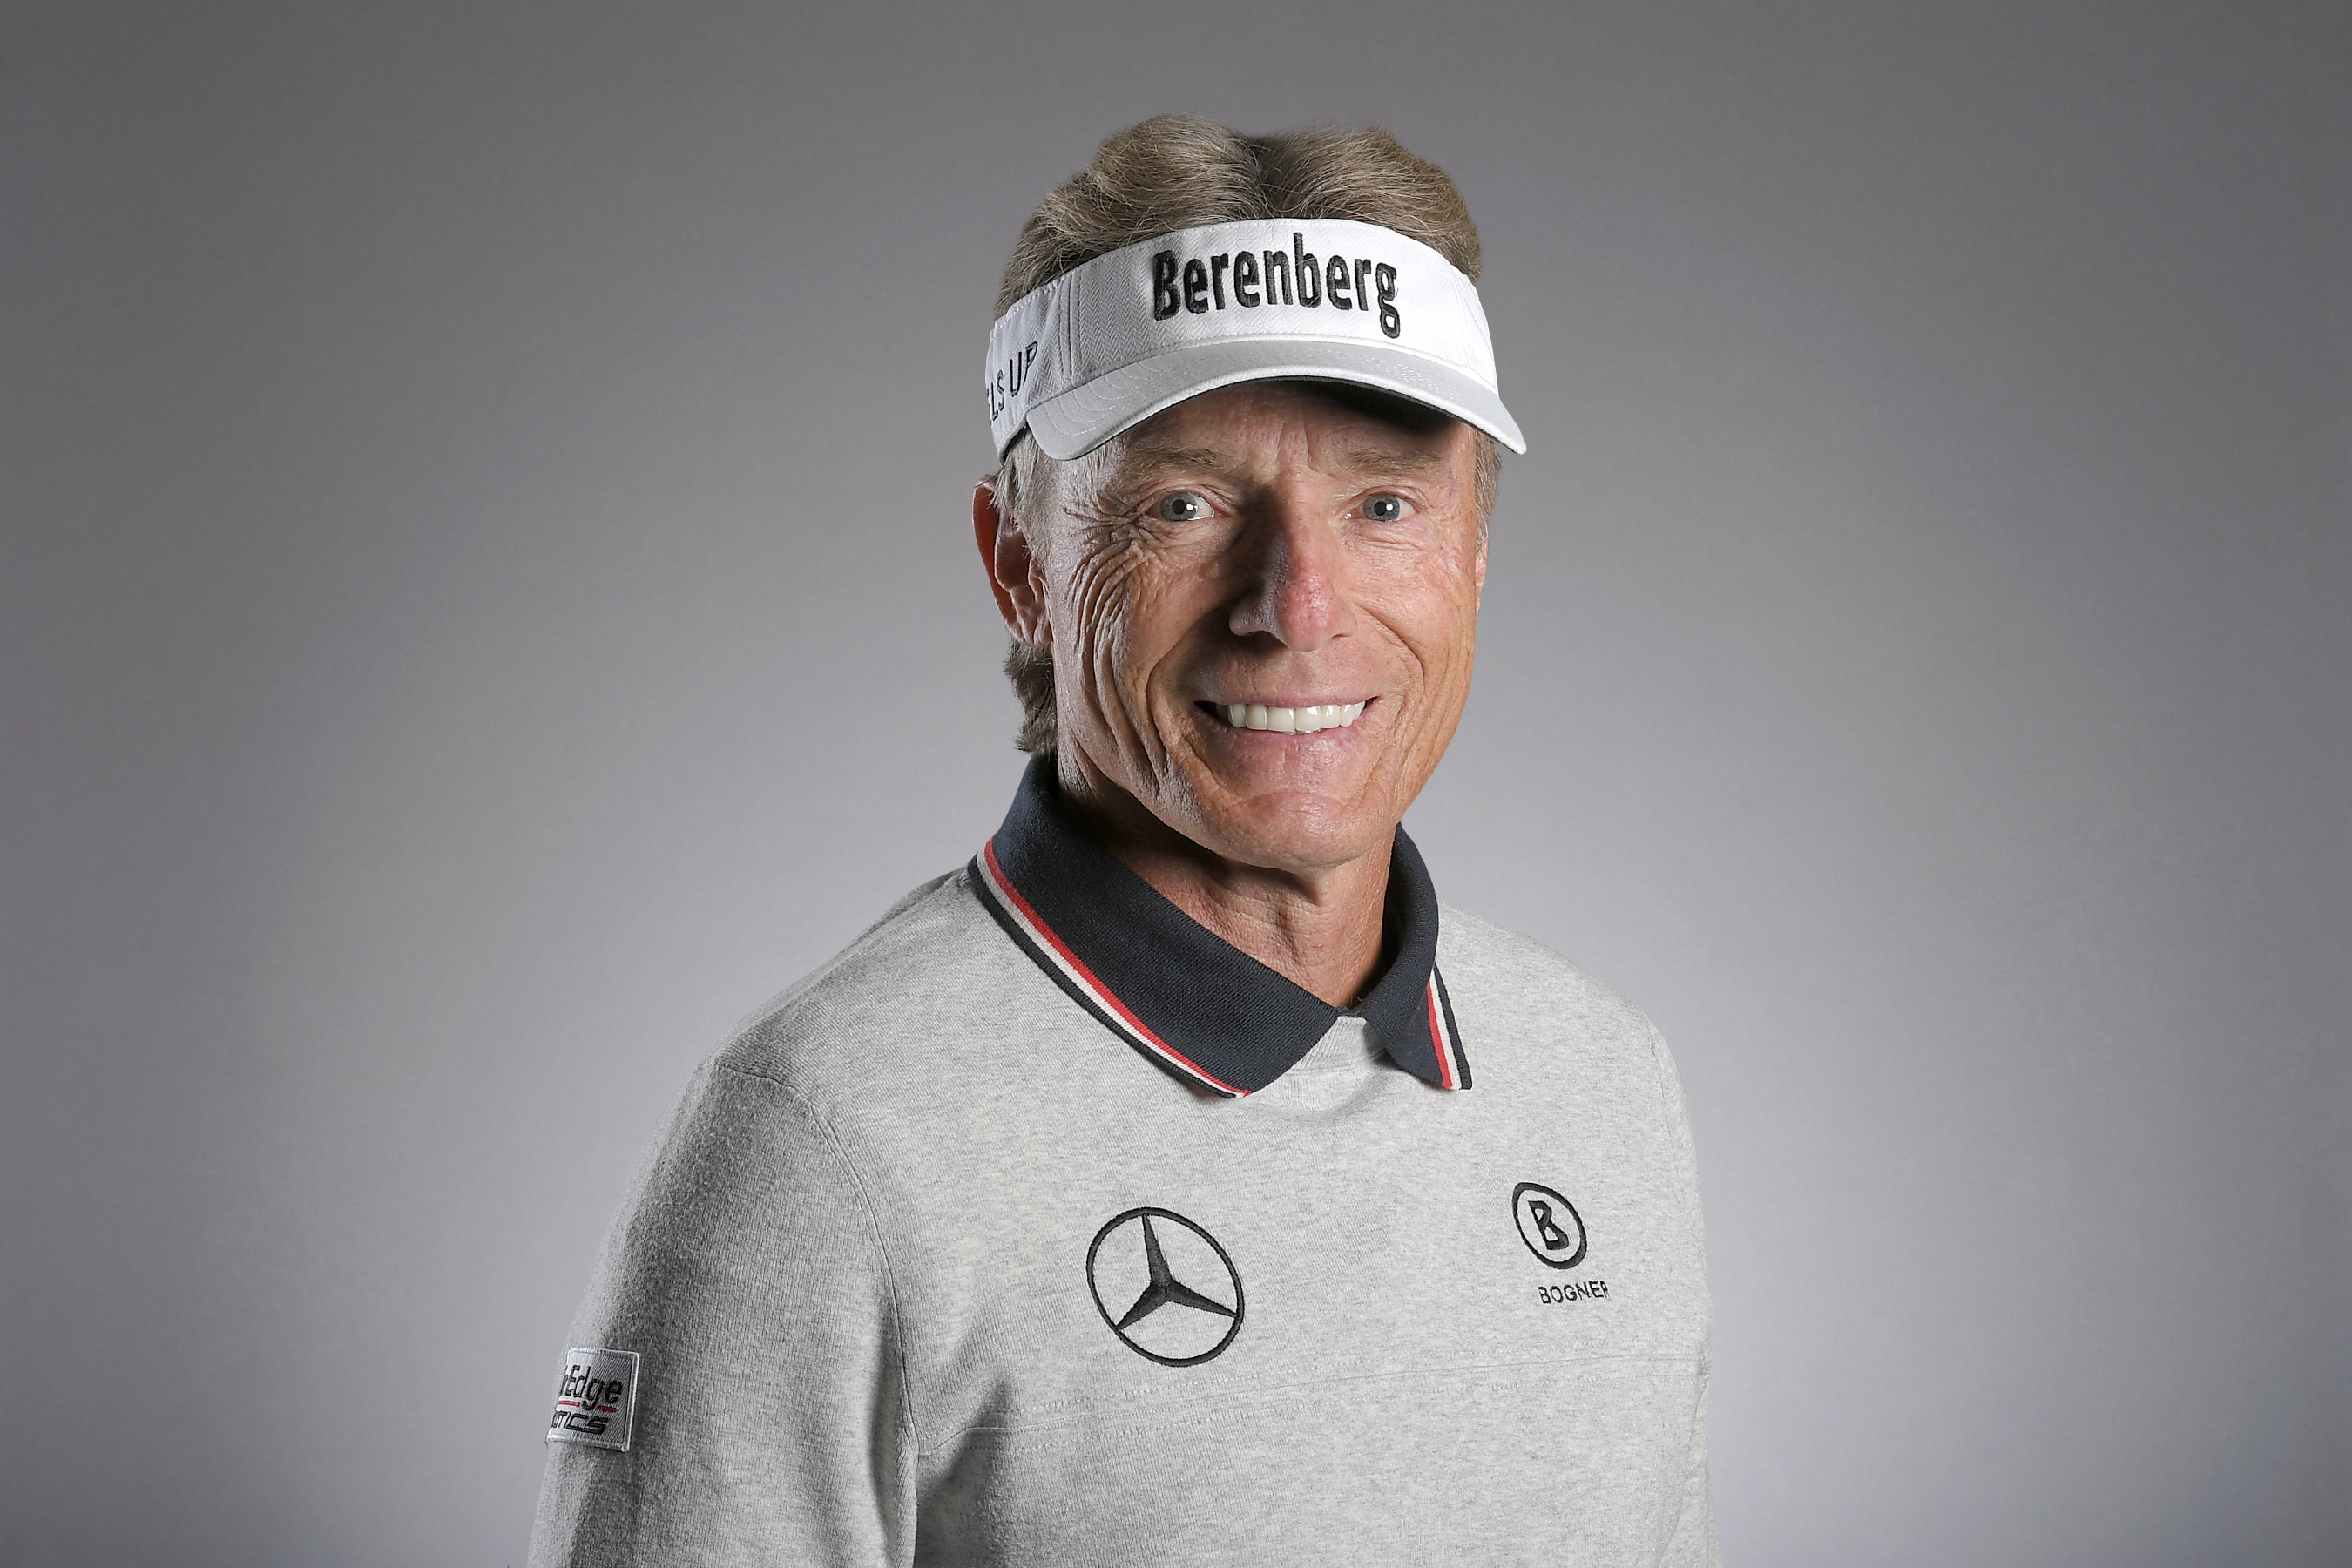 Bernhard Langer current official PGA TOUR headshot. (Photo by Ben Jared/PGA TOUR via Getty Images)